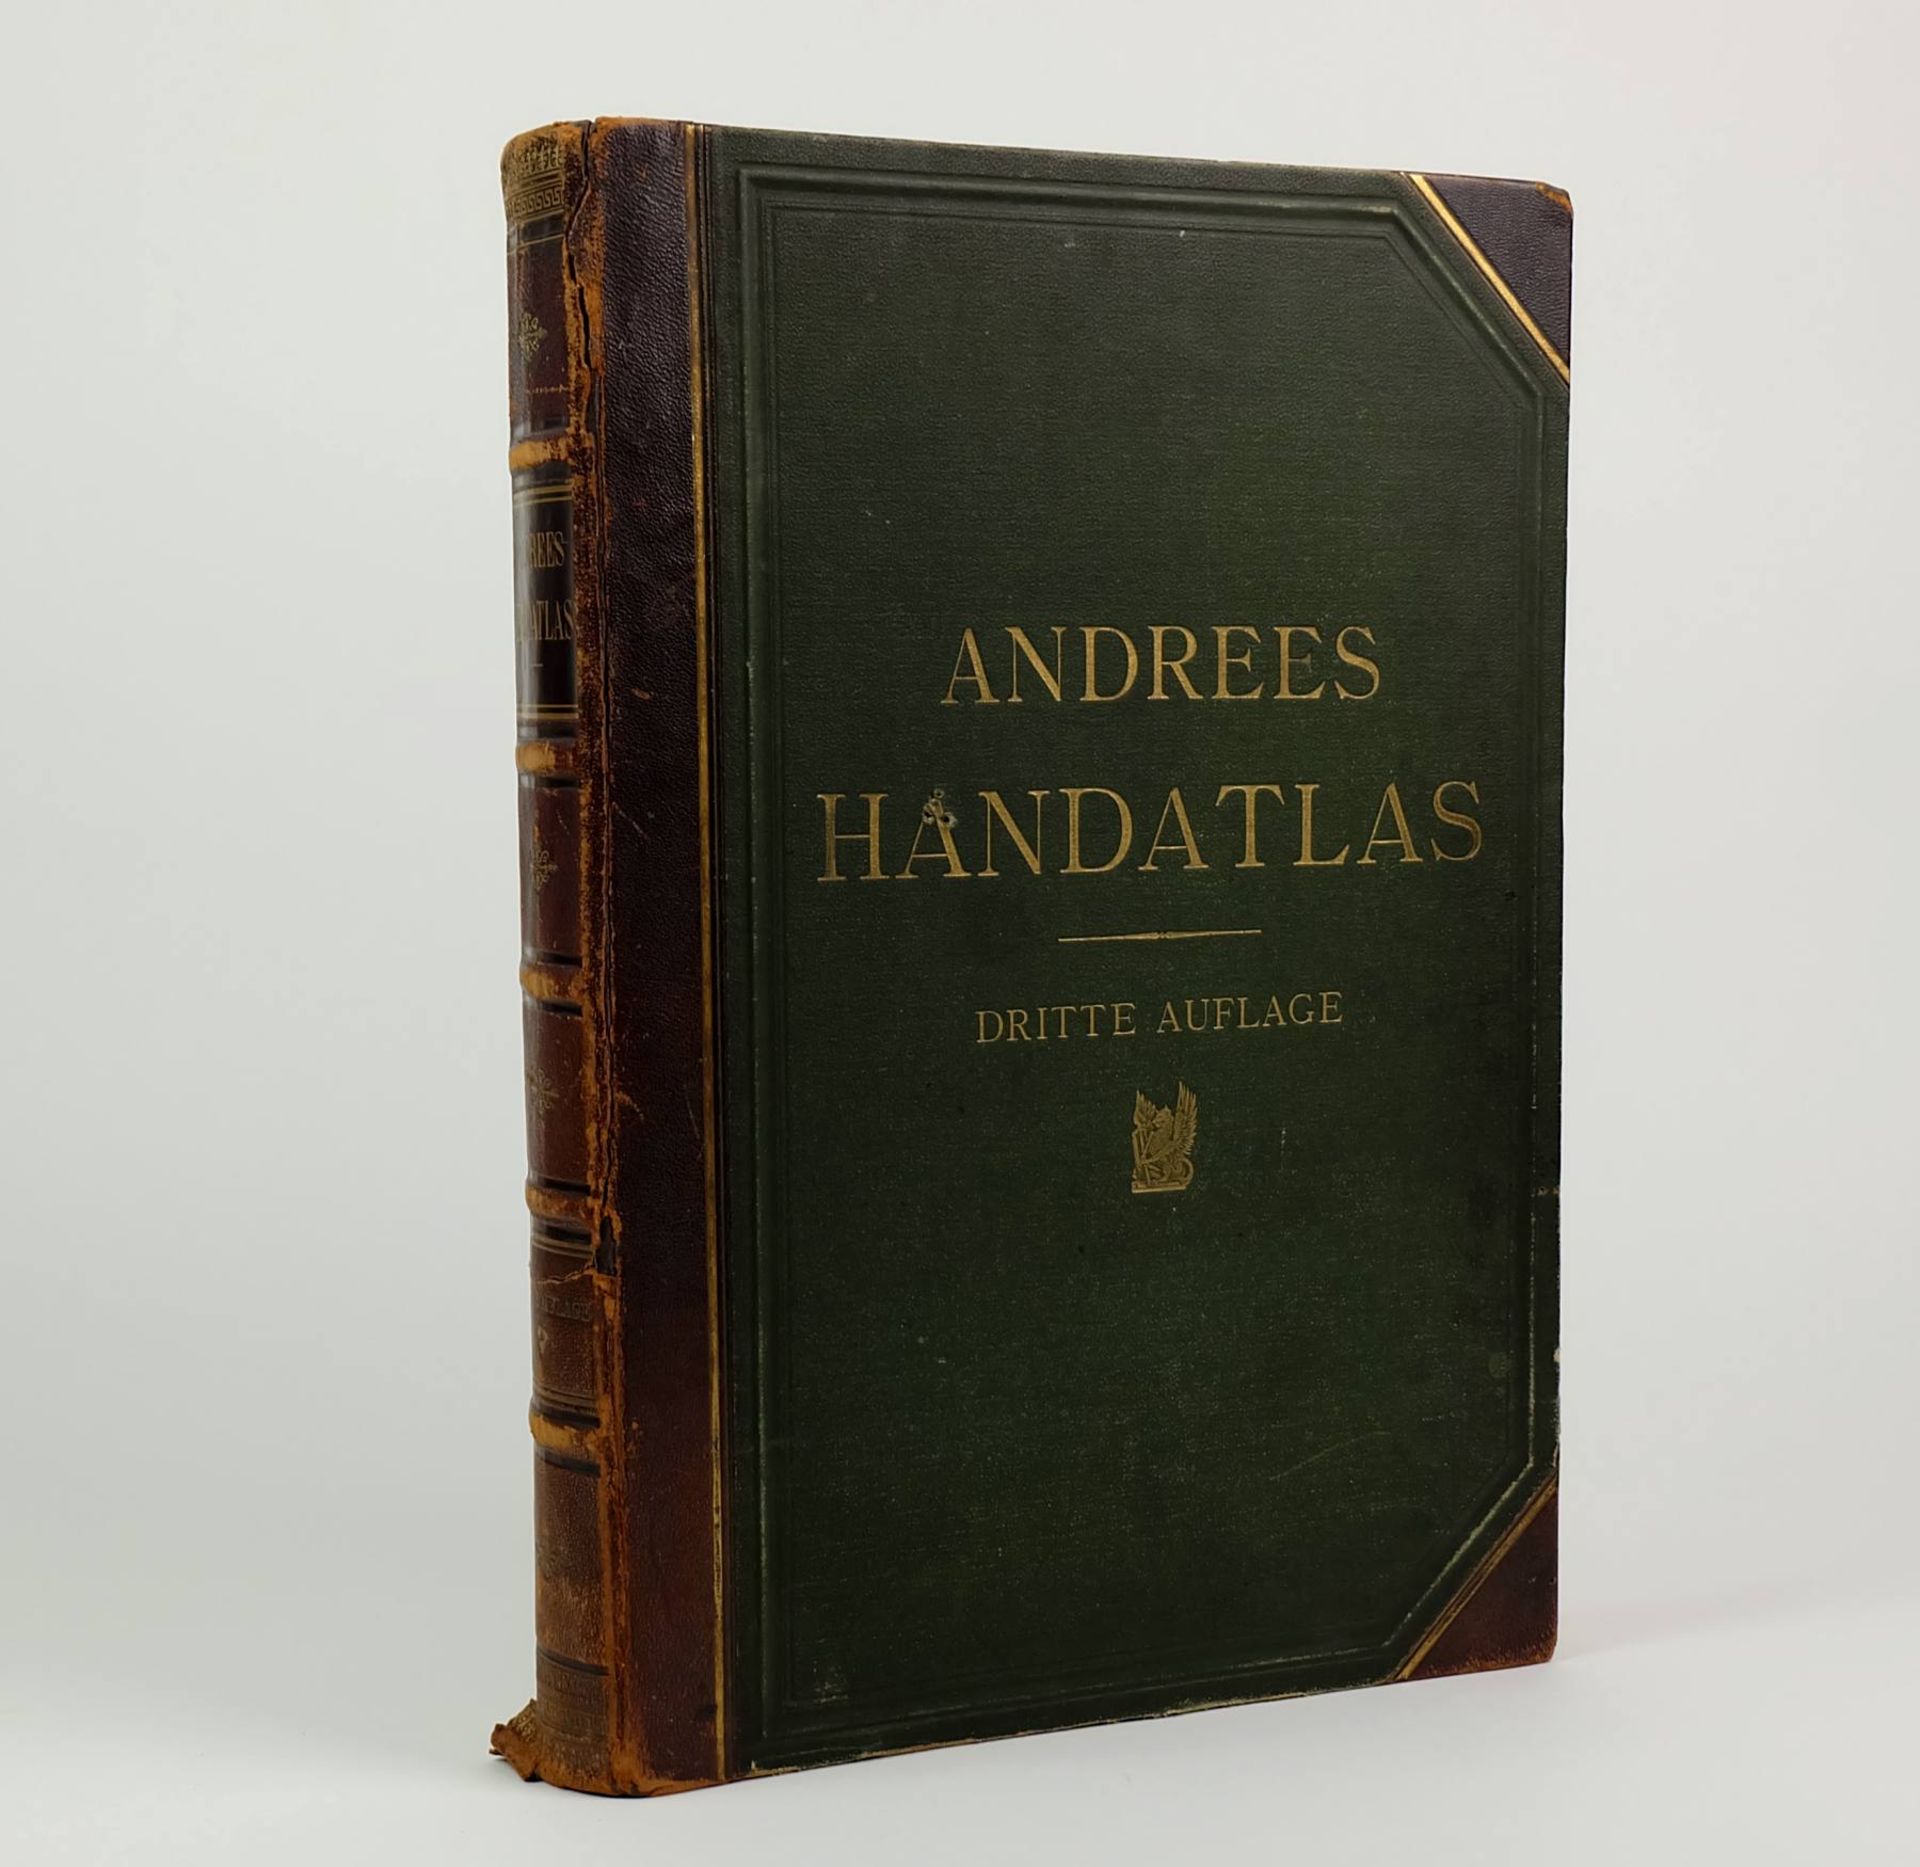 ANDREES HANDATLAS,